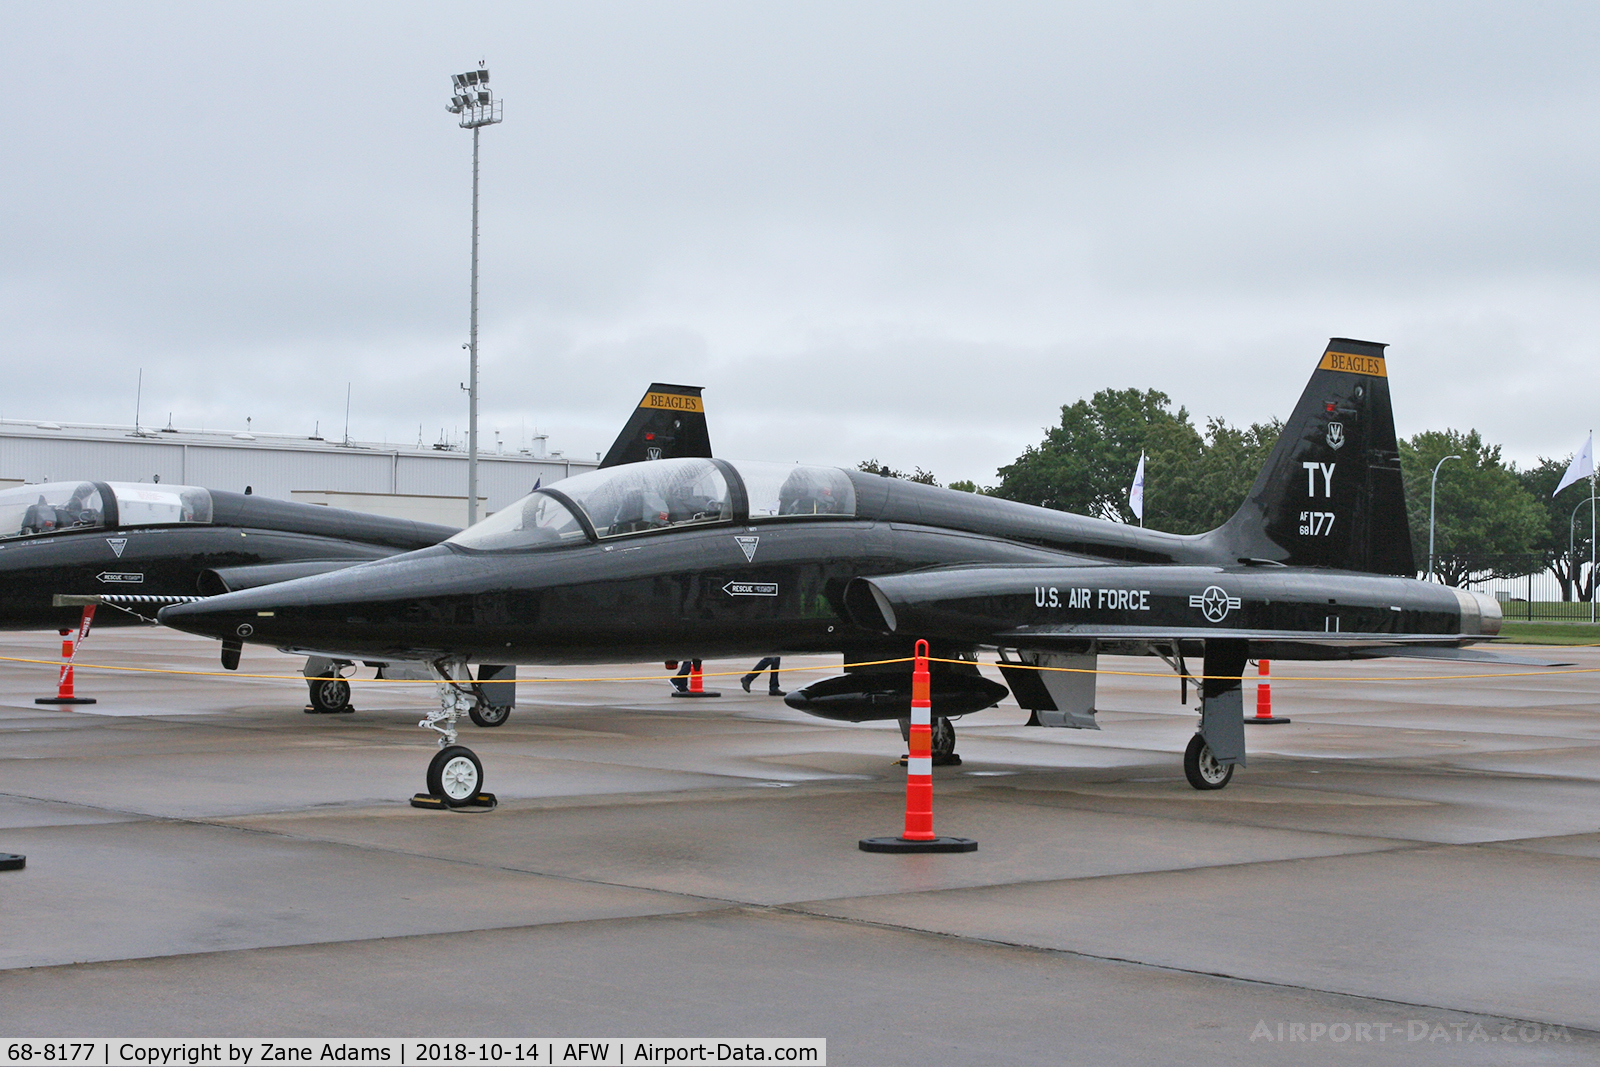 68-8177, 1968 Northrop T-38A Talon C/N T.6182, (Former USAF Thunderbird aircraft) 
At the 2018 Alliance Airshow - Fort Worth, Texas